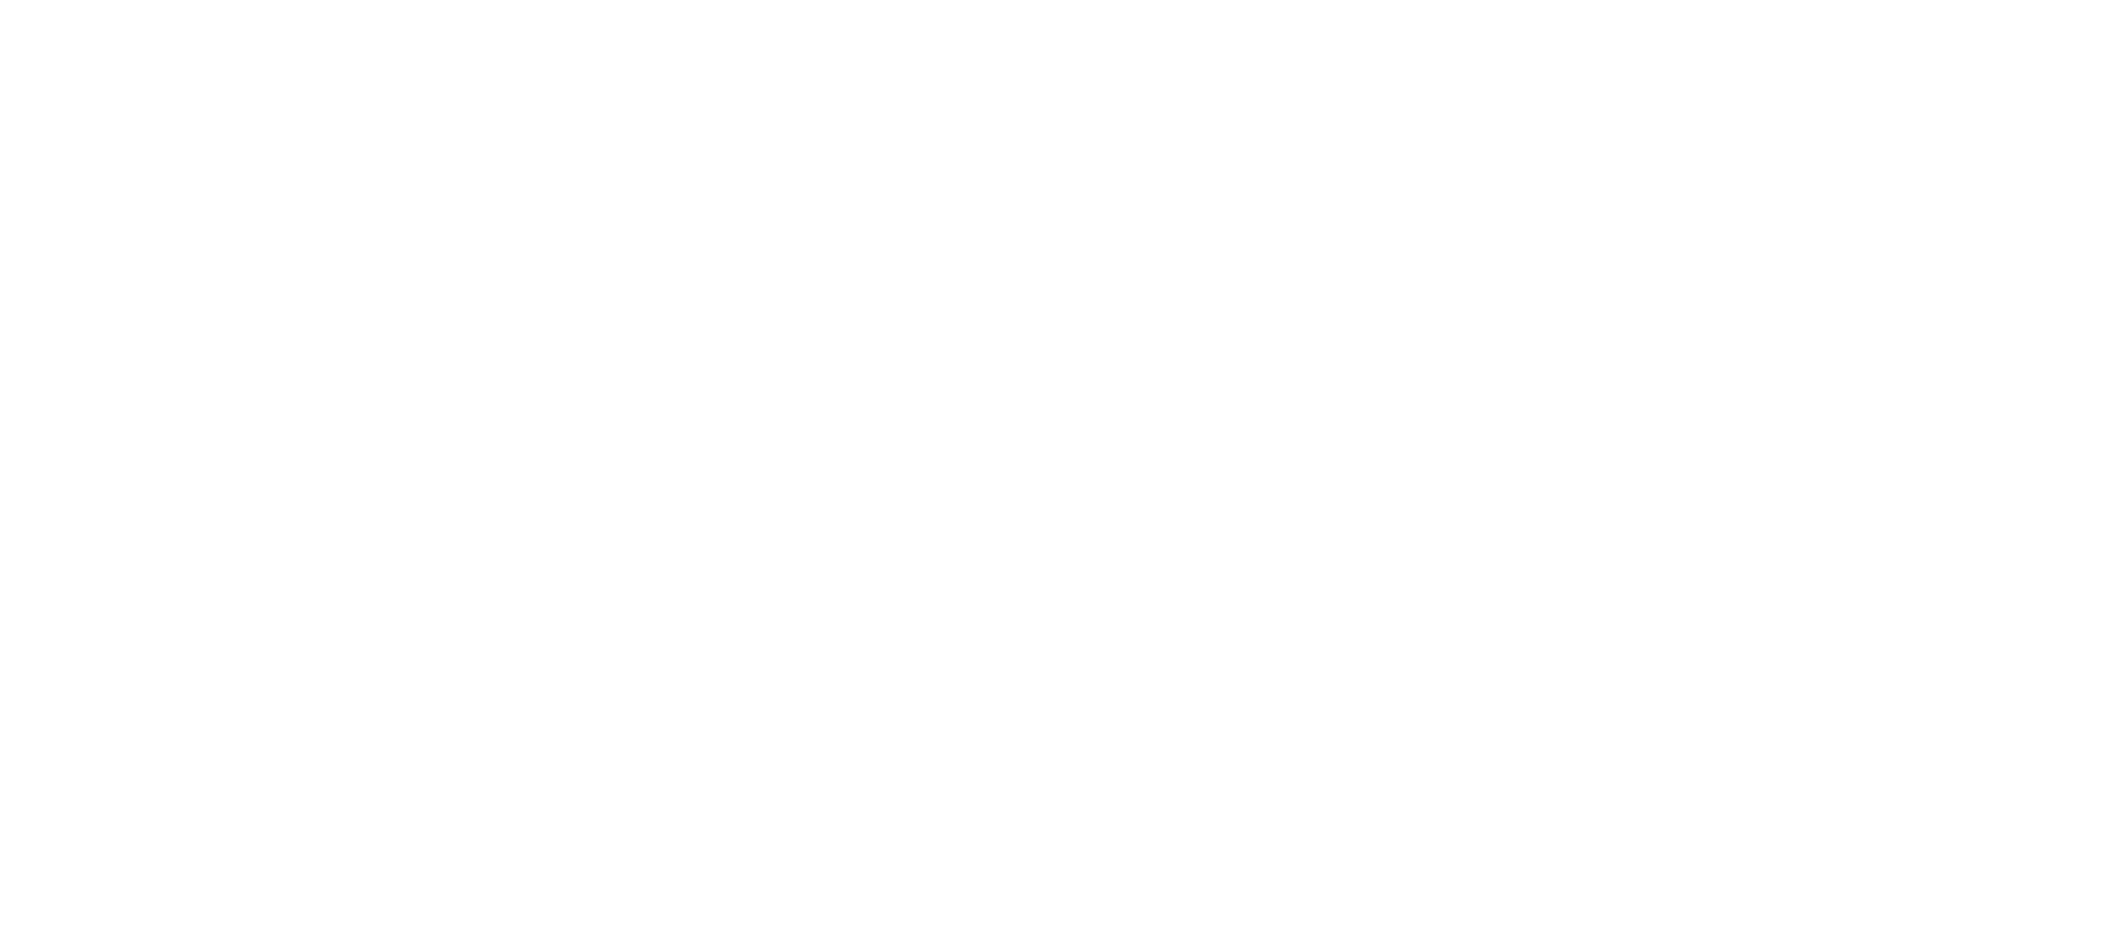 song qi logo blanc